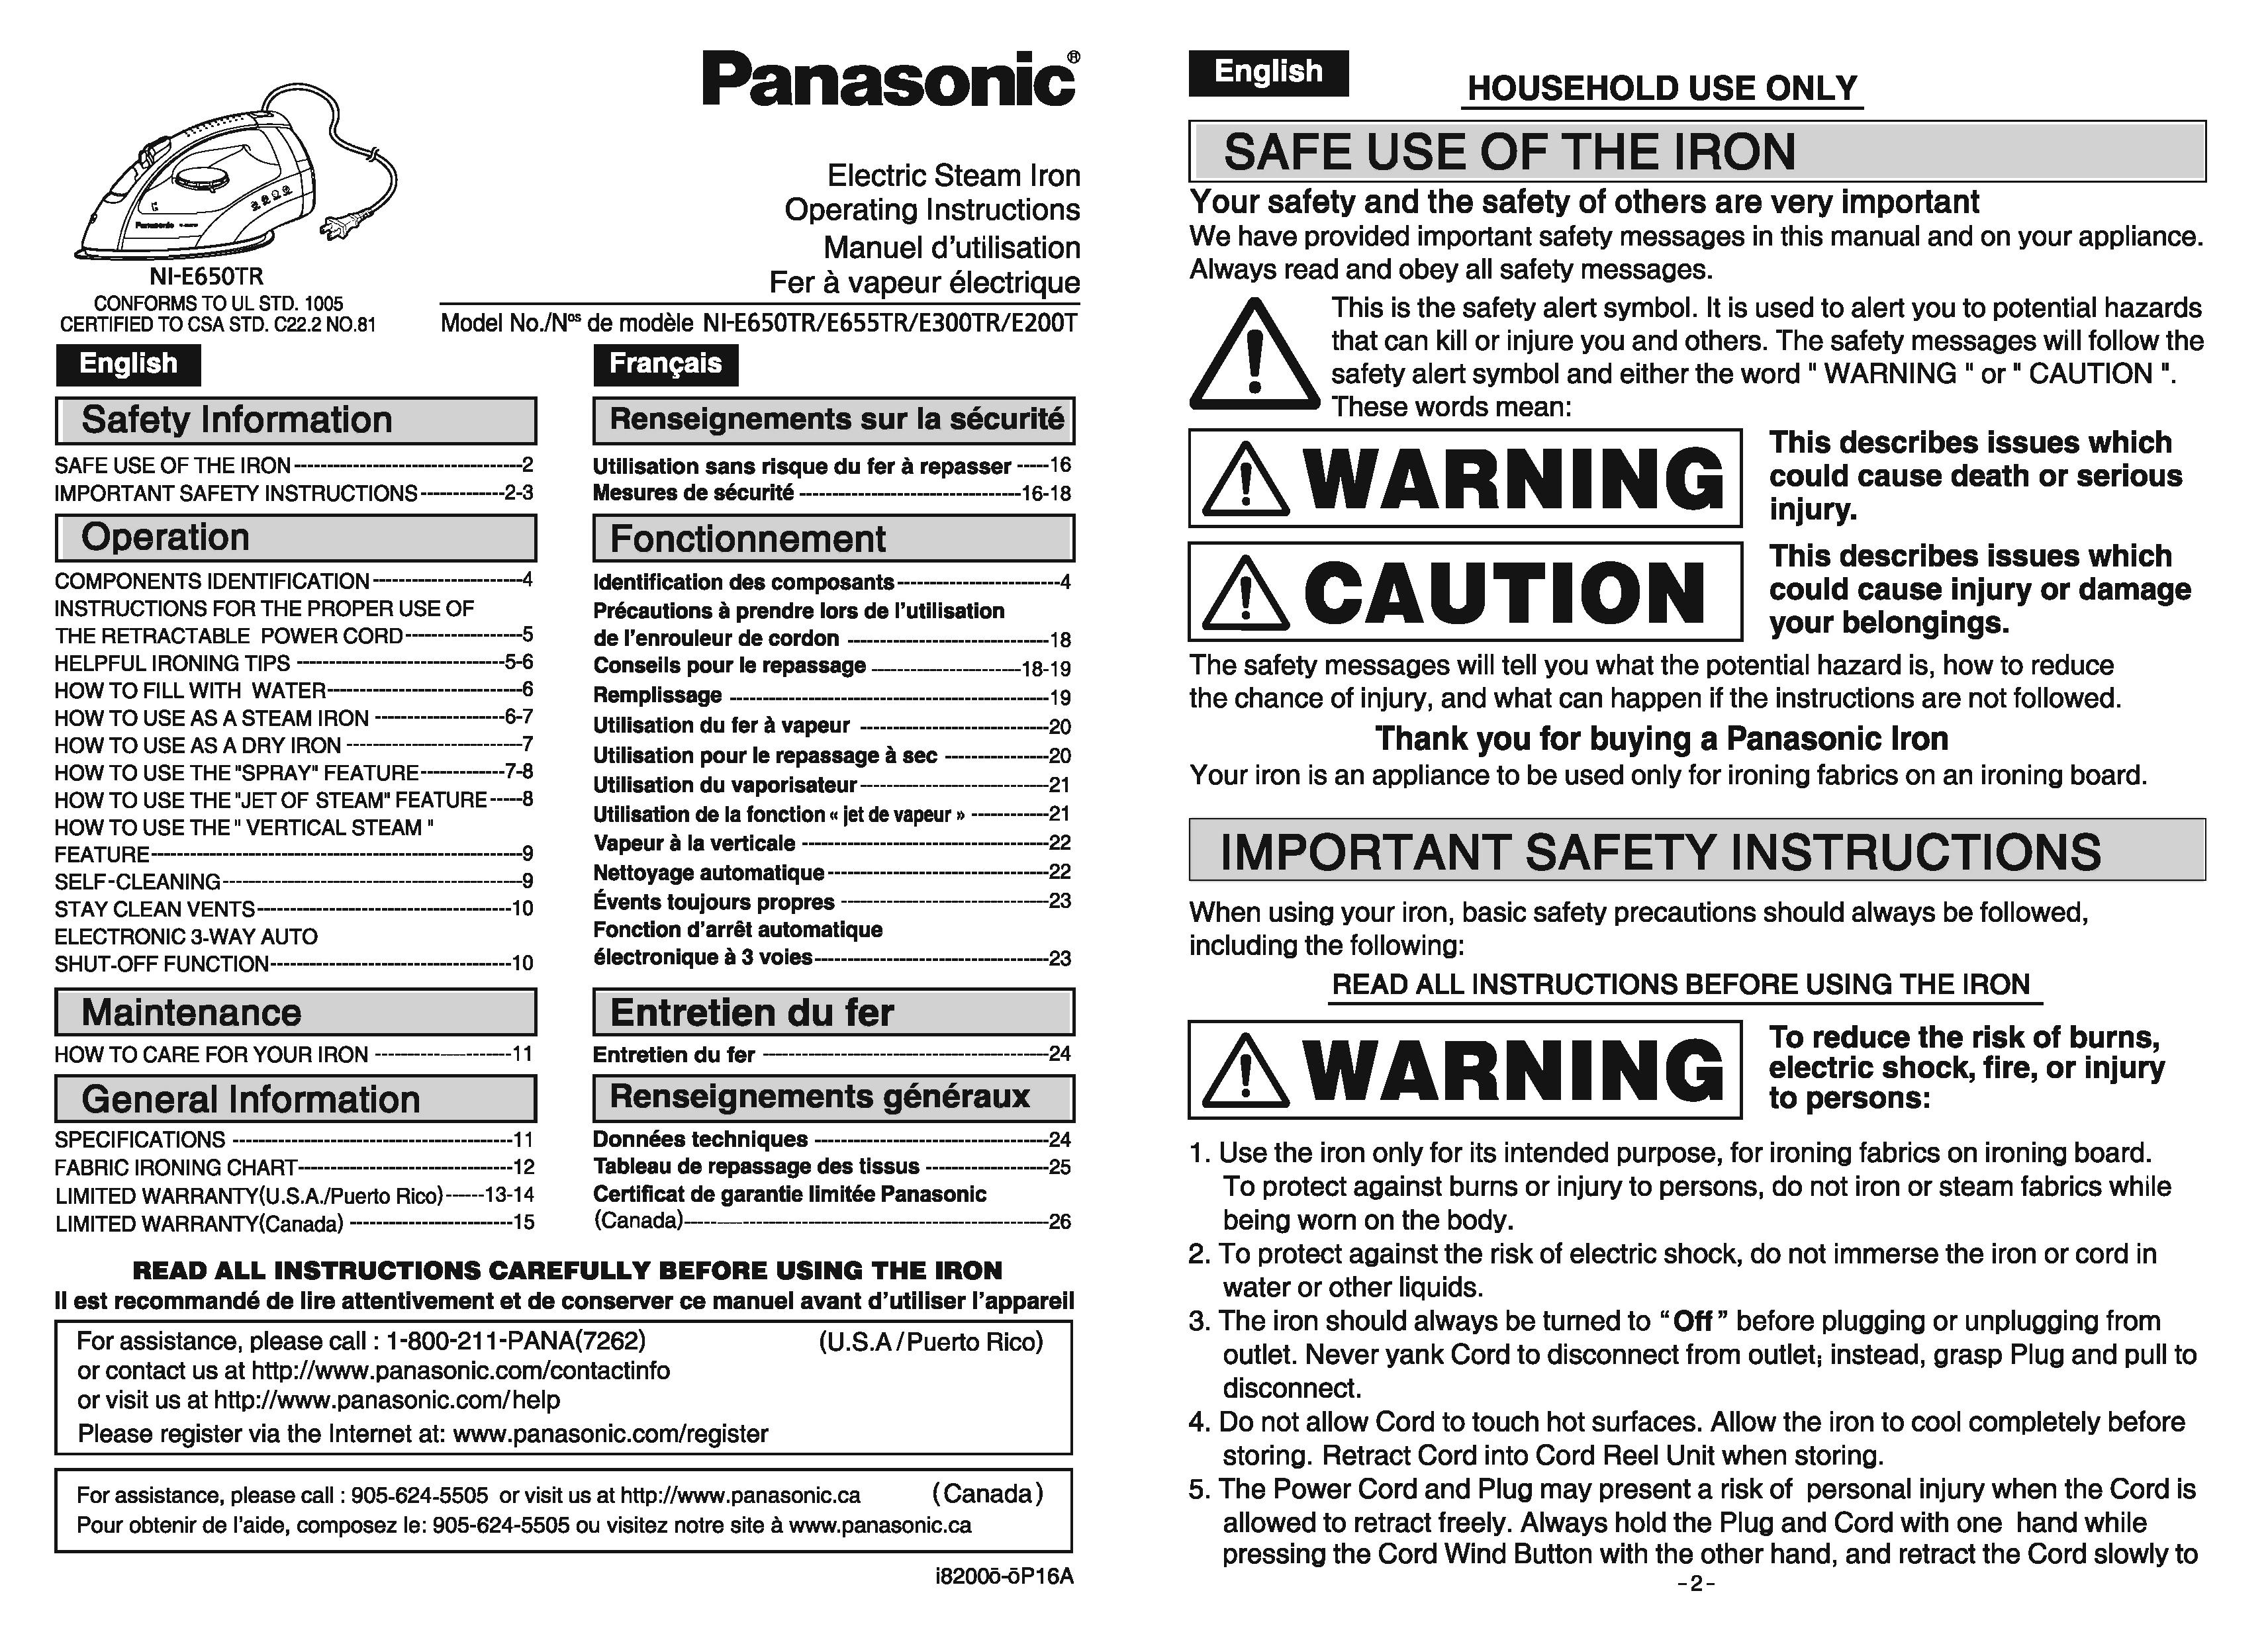 Panasonic NI-E650TR Iron User Manual